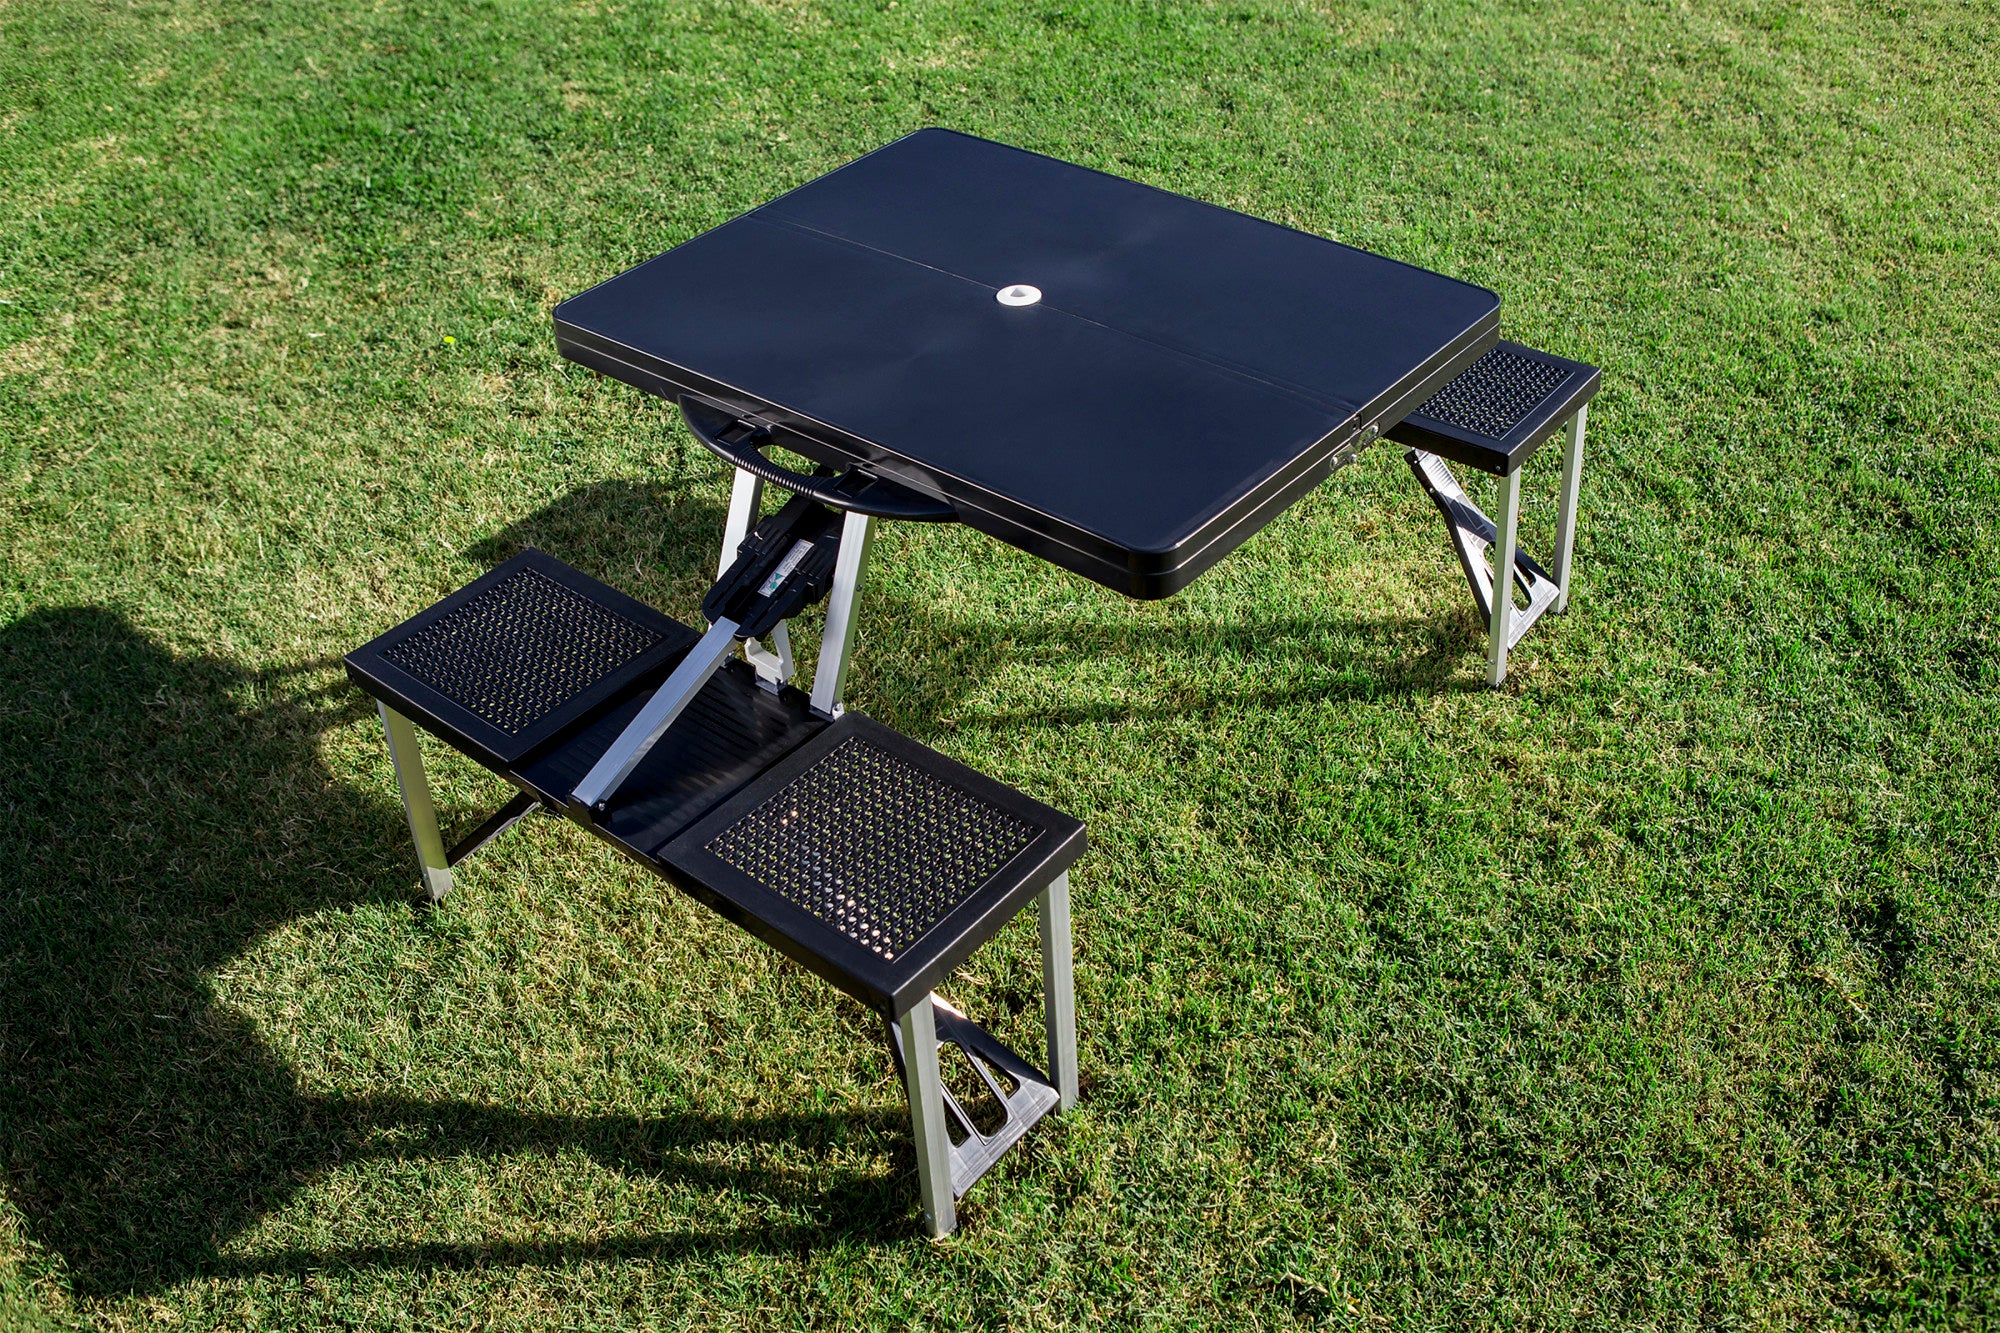 Baseball Diamond - Arizona Diamondbacks - Picnic Table Portable Folding Table with Seats